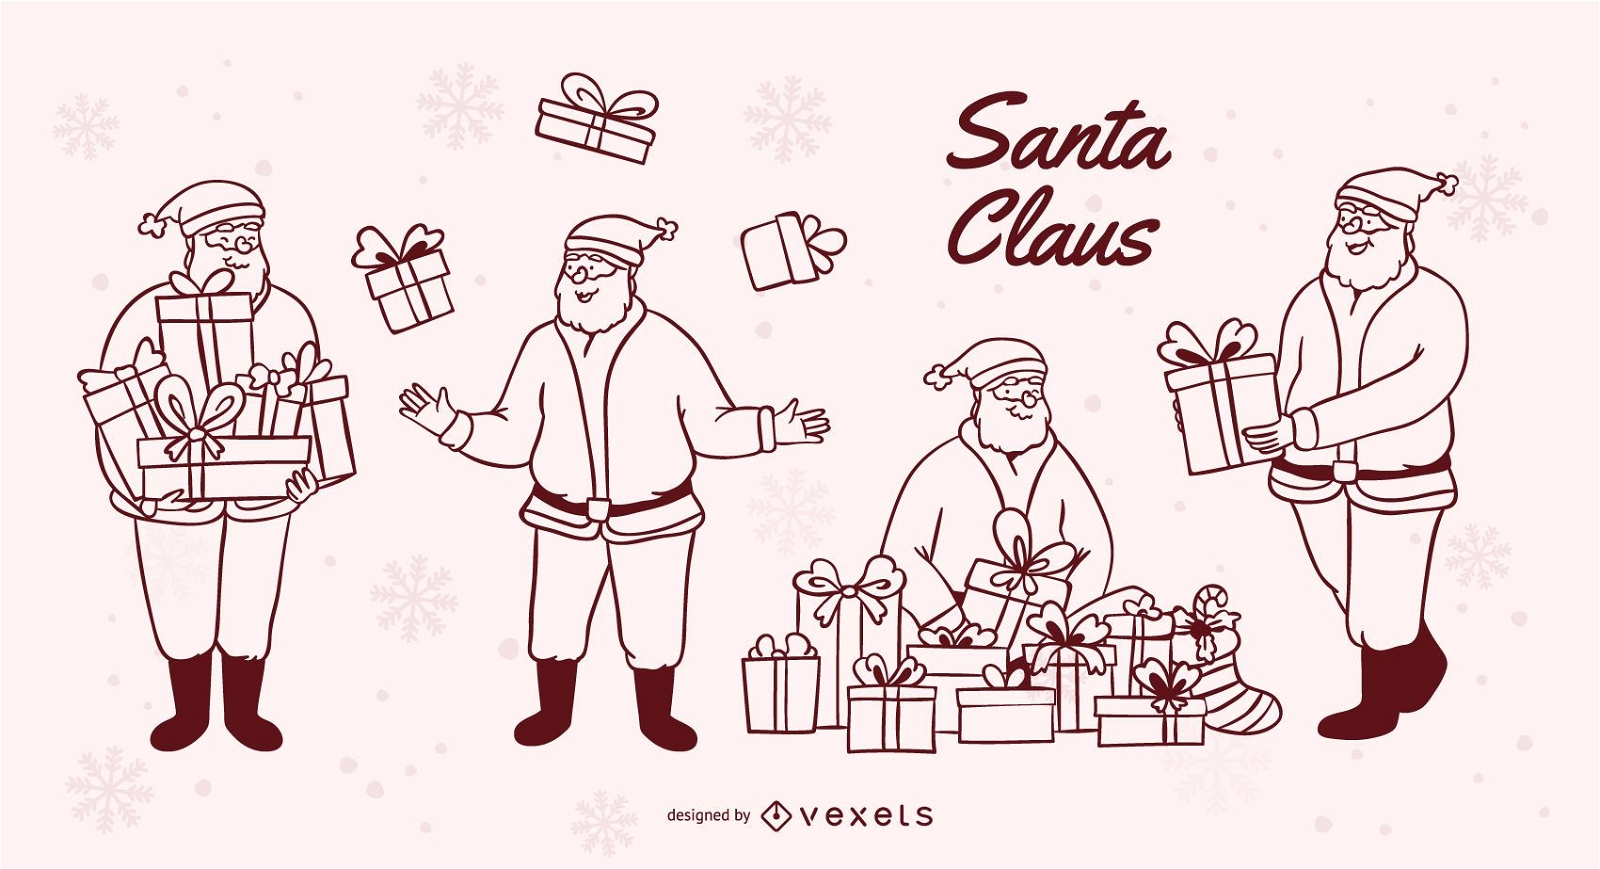 Santa claus gifts stroke set